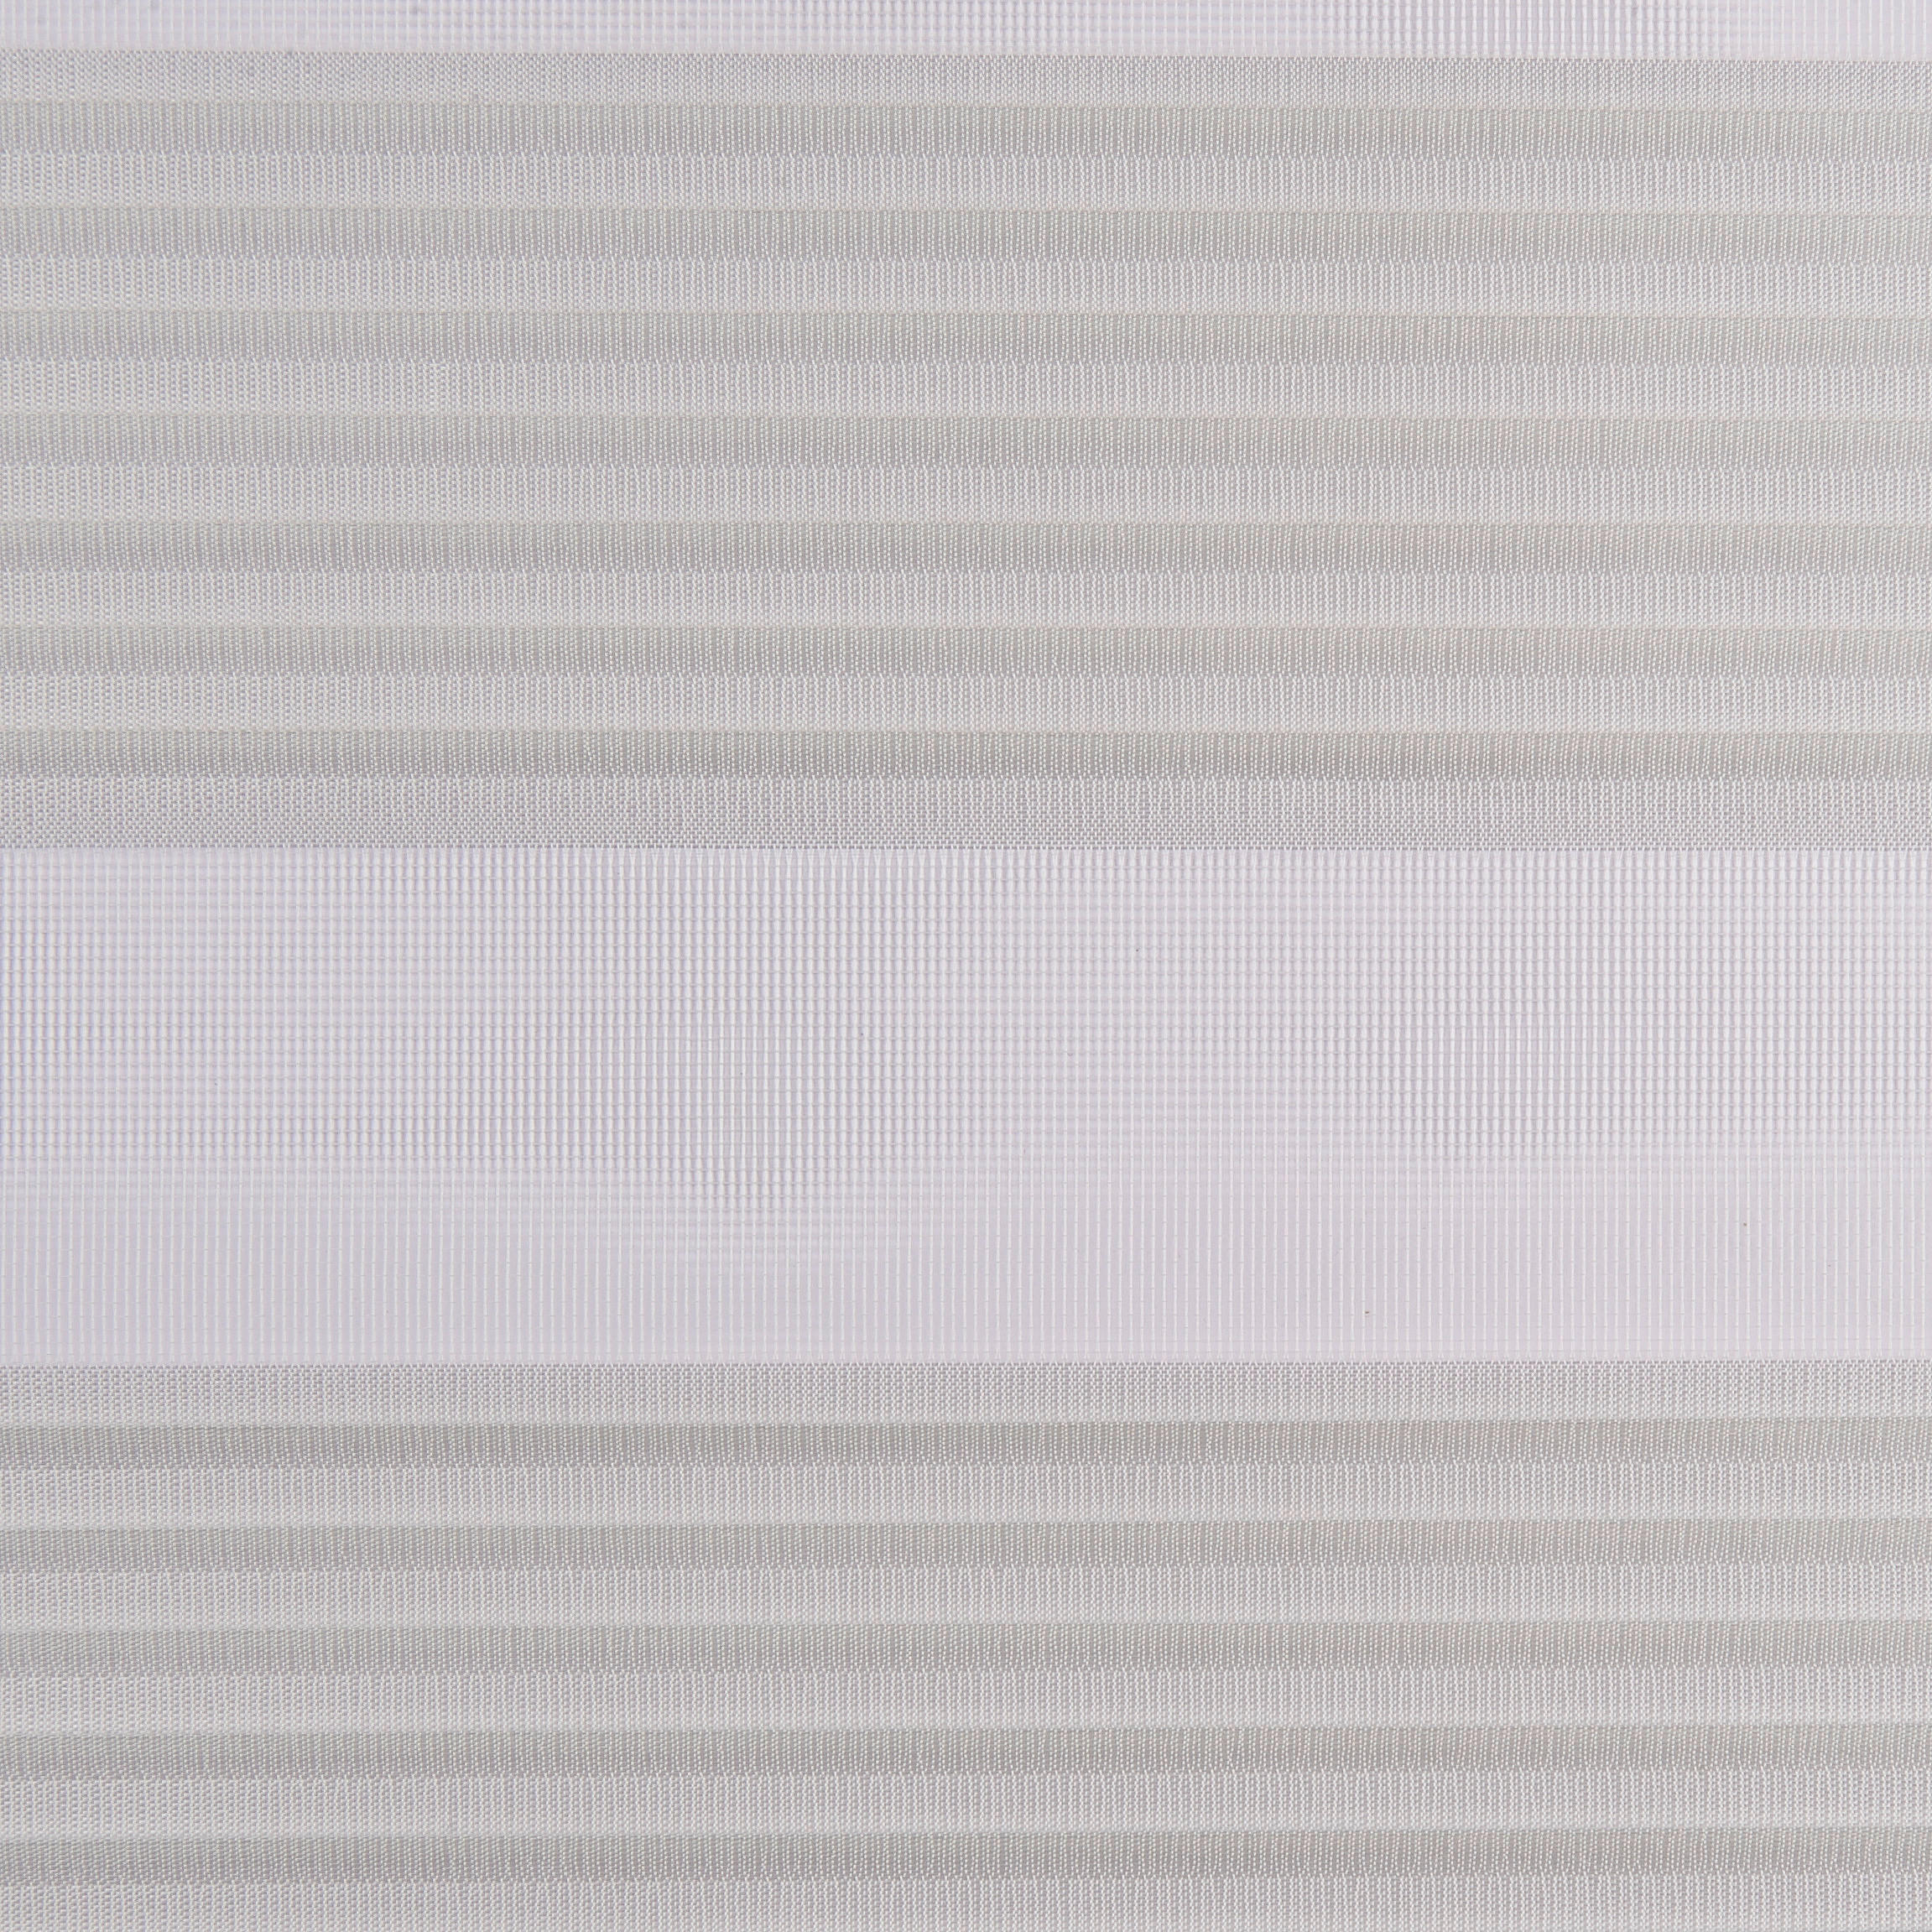 Schiebevorhang Timba weiß B/L: ca. 60x245 cm Timba - weiß (60,00/245,00cm)